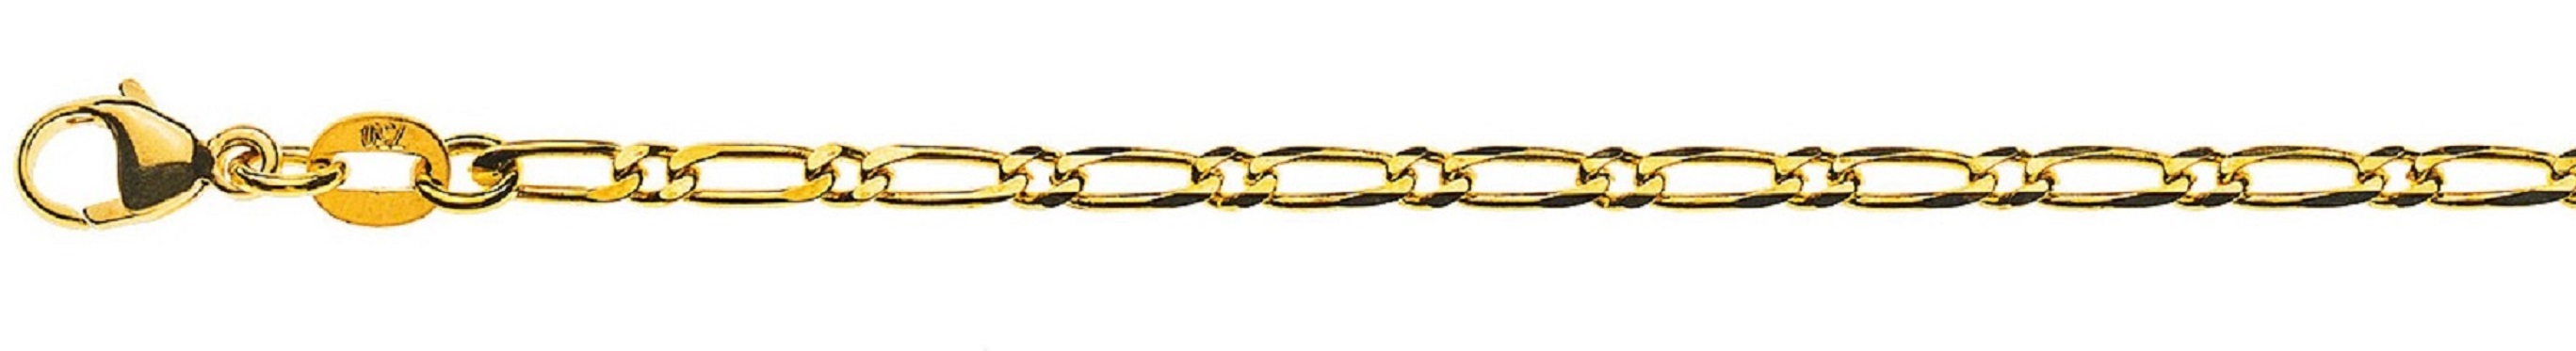 AURONOS Prestige Halskette Gelbgold 18K Figarokette 60cm 2.3mm